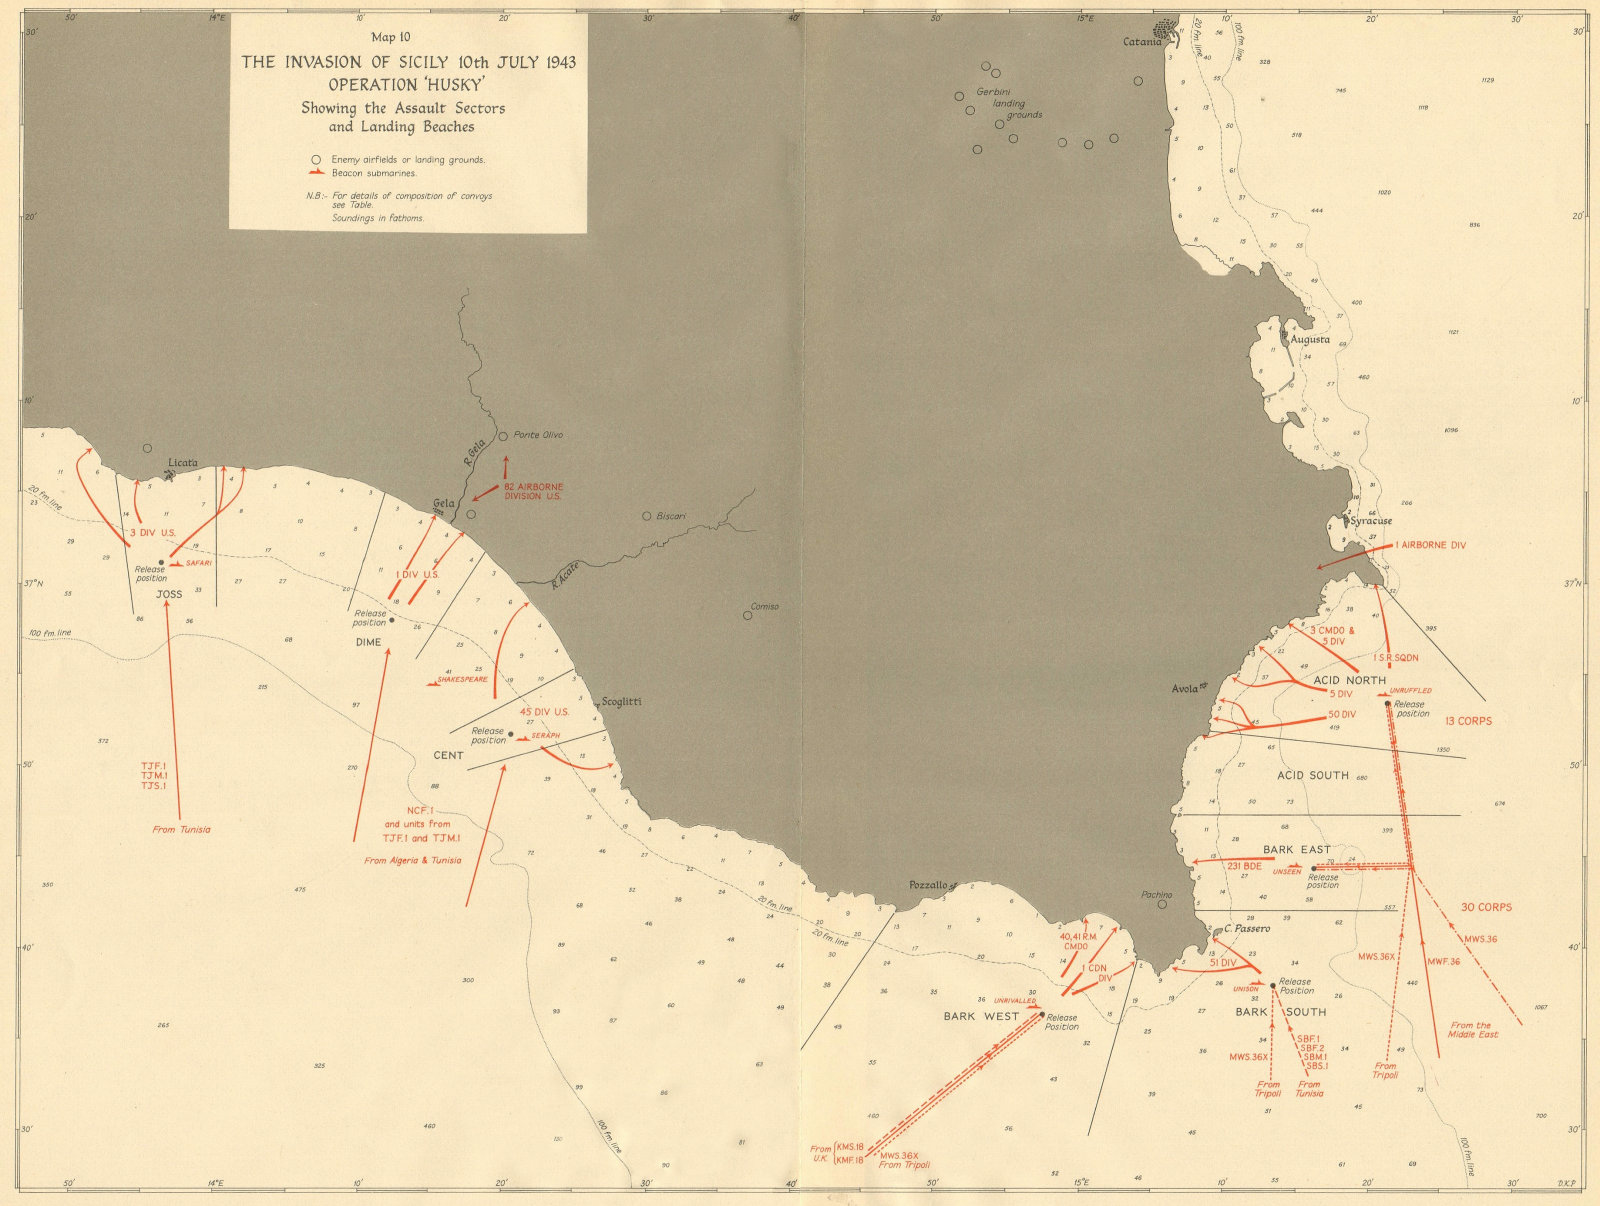 Associate Product Invasion of Sicily Operation Husky Assault landing beaches 10 July 1943 1954 map